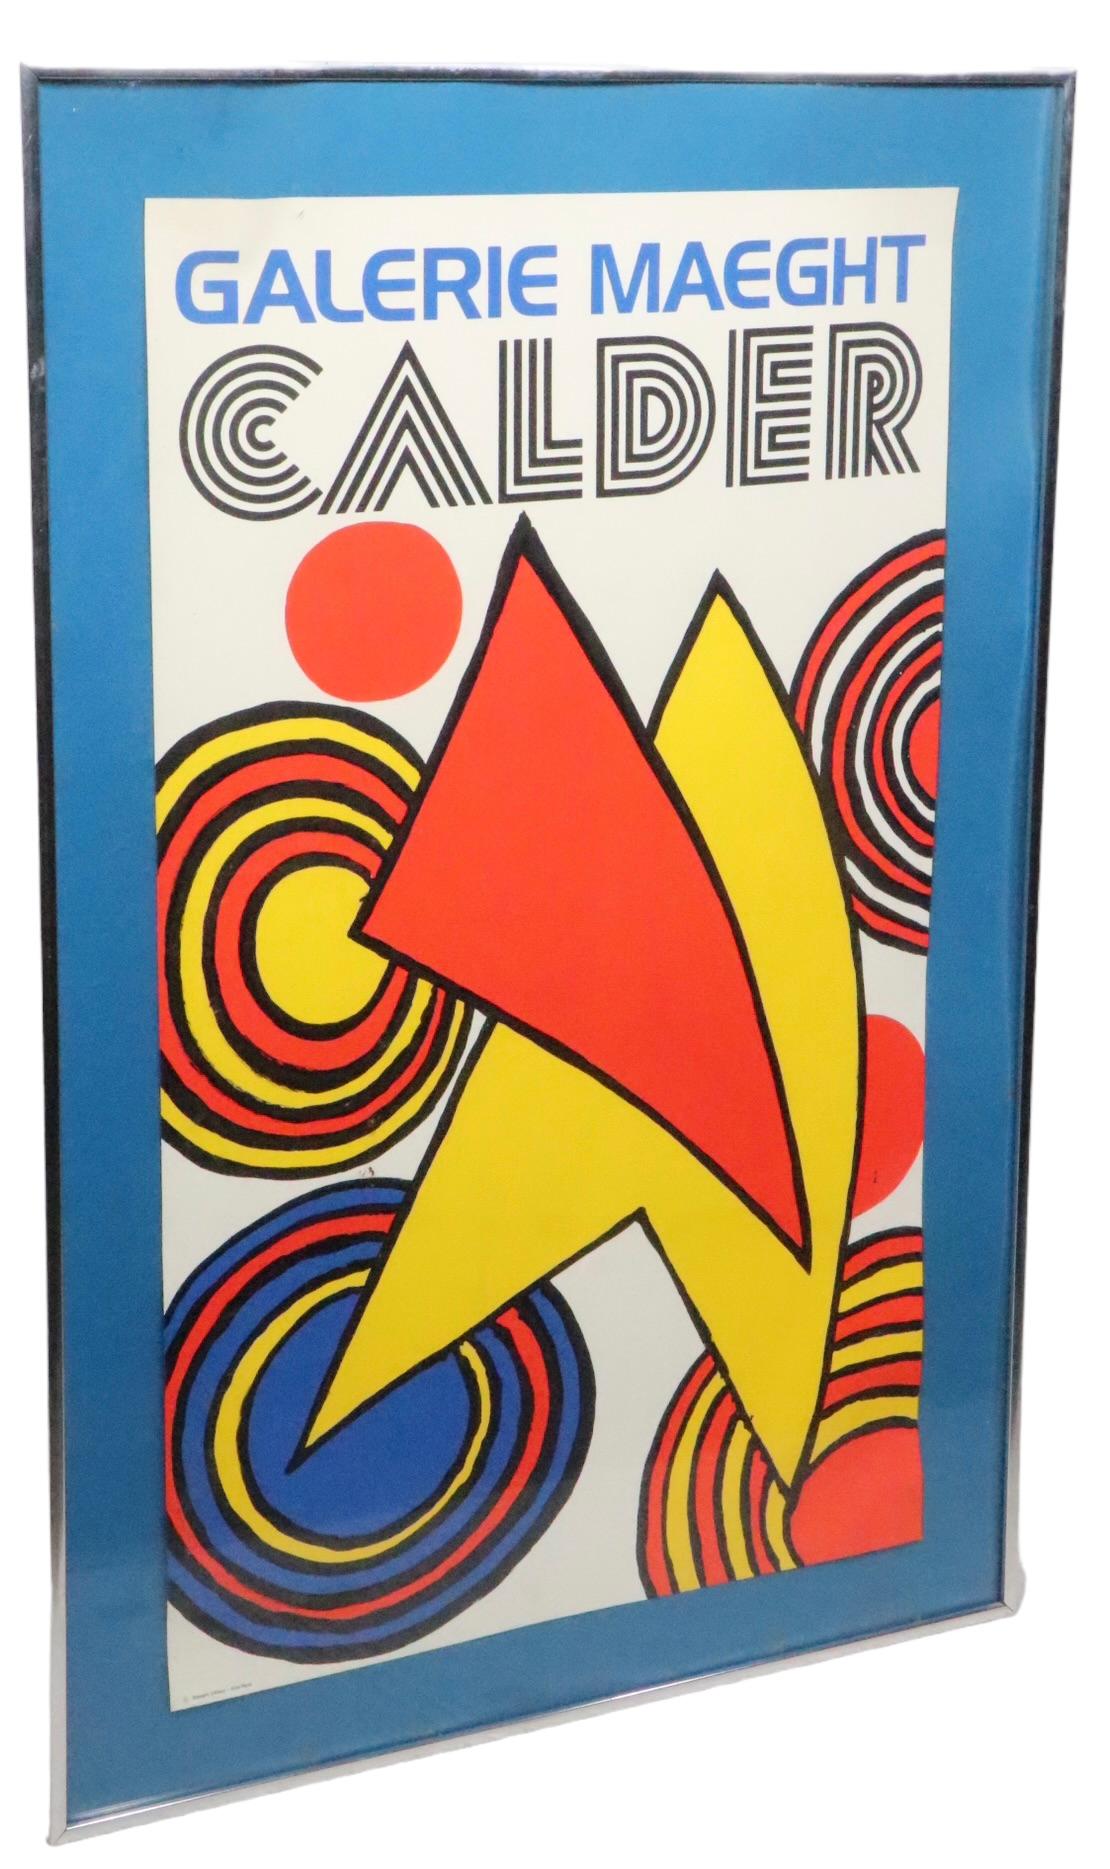 French  Framed Calder Galerie Maeght Lithograph  Poster Maeght Editeur - Arte Paris 70s For Sale